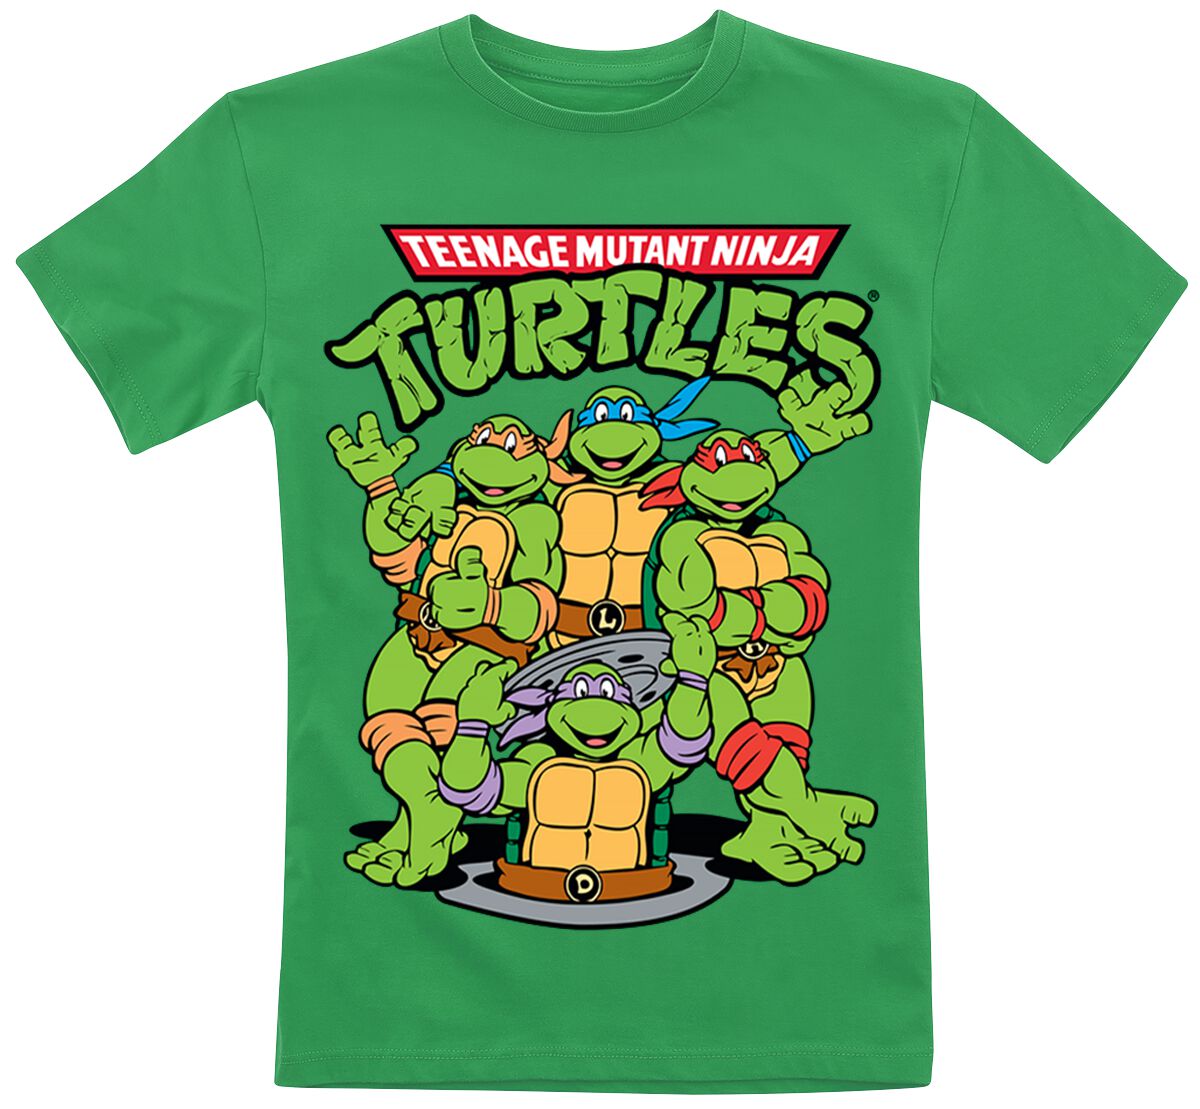 Teenage Mutant Ninja Turtles Kids - Group T-Shirt grün in 128